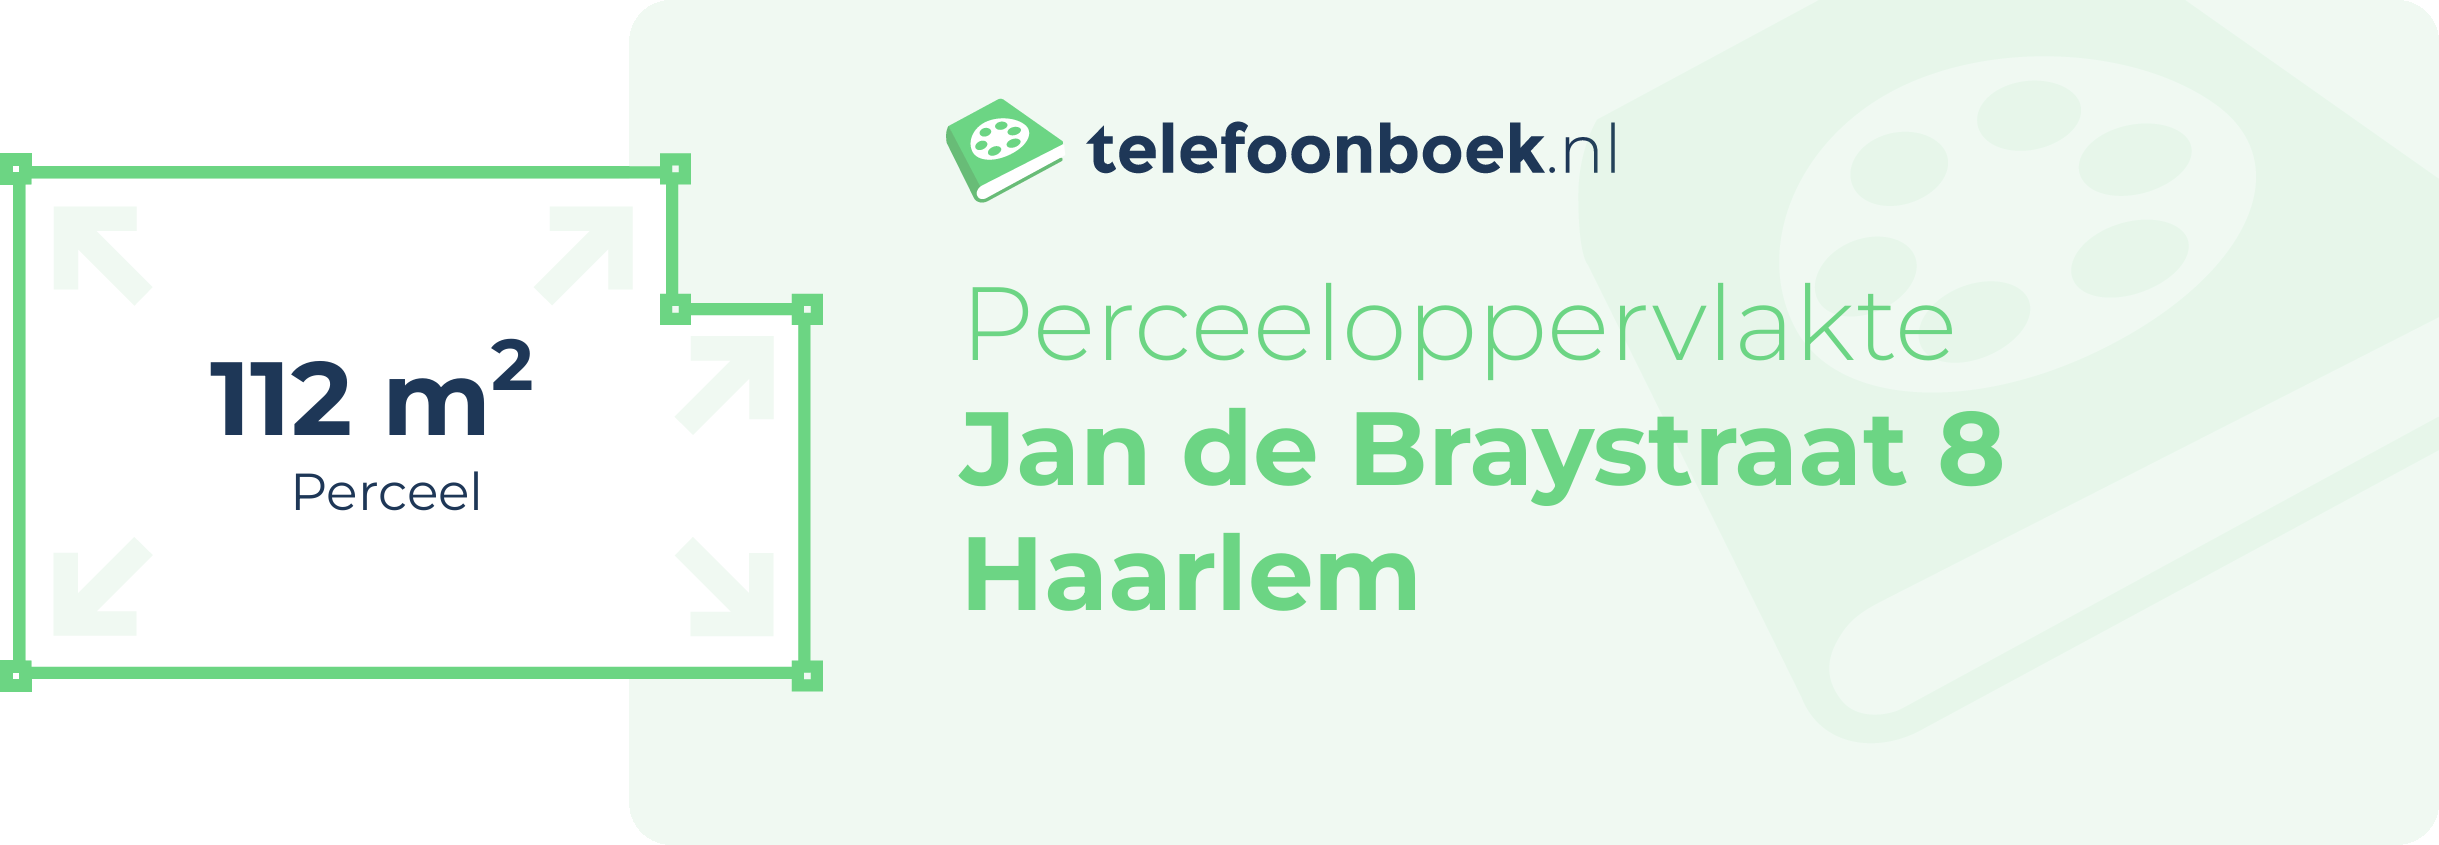 Perceeloppervlakte Jan De Braystraat 8 Haarlem